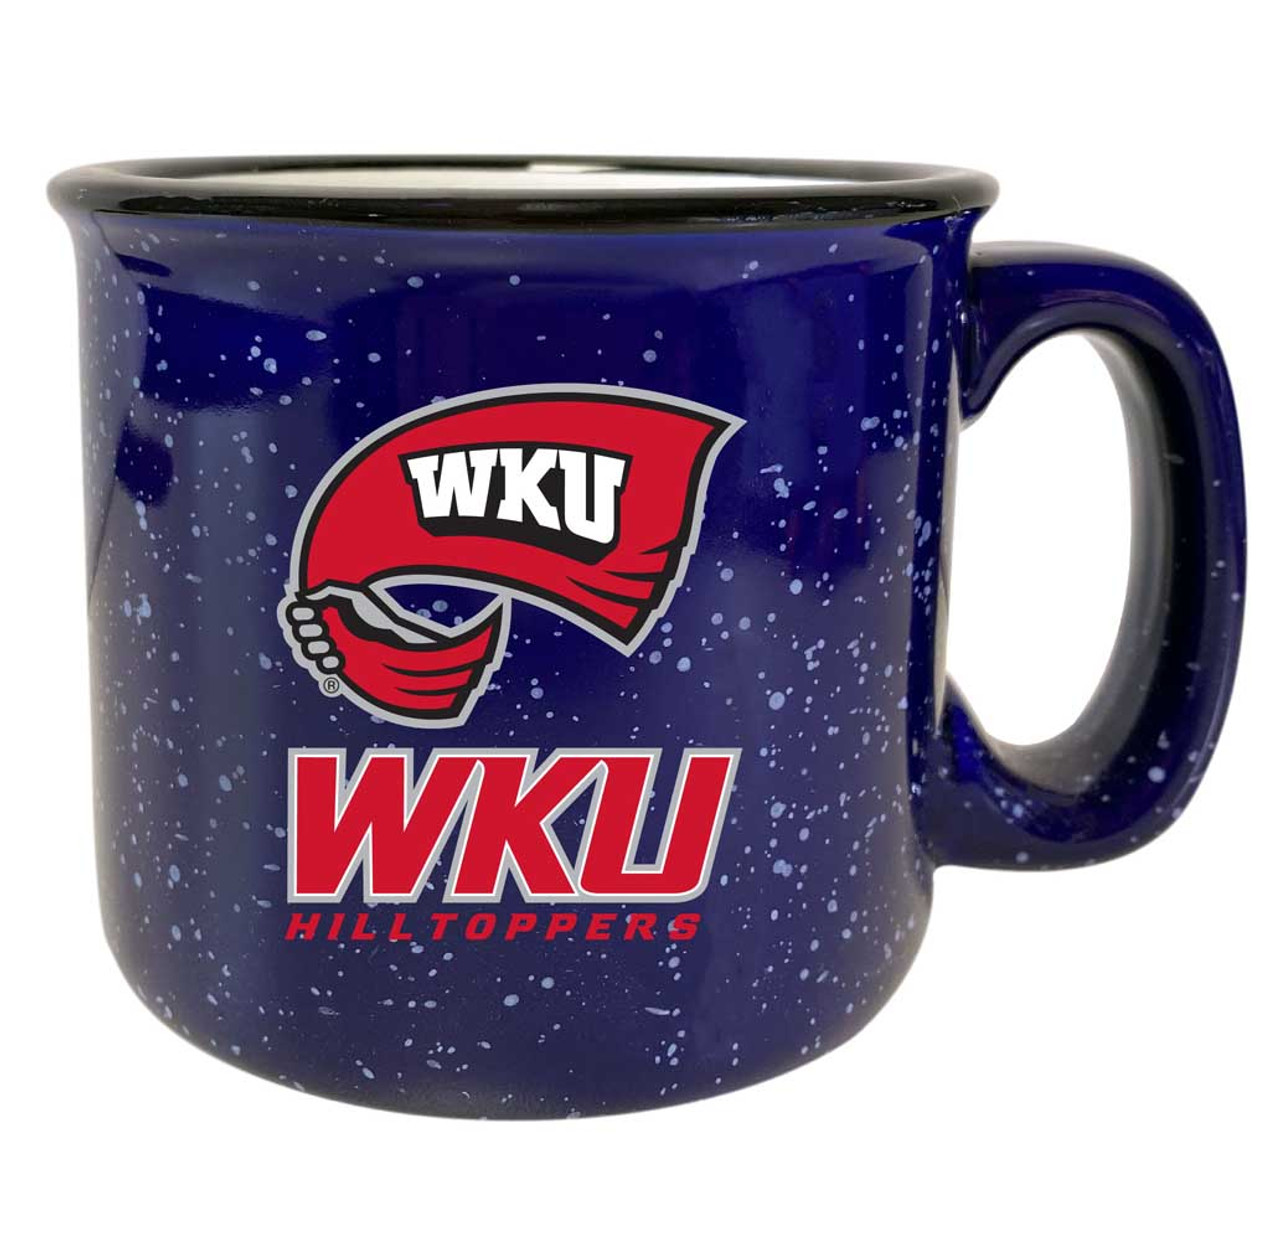 Western Kentucky Hilltoppers Speckled Ceramic Camper Coffee Mug (Choose Your Color).